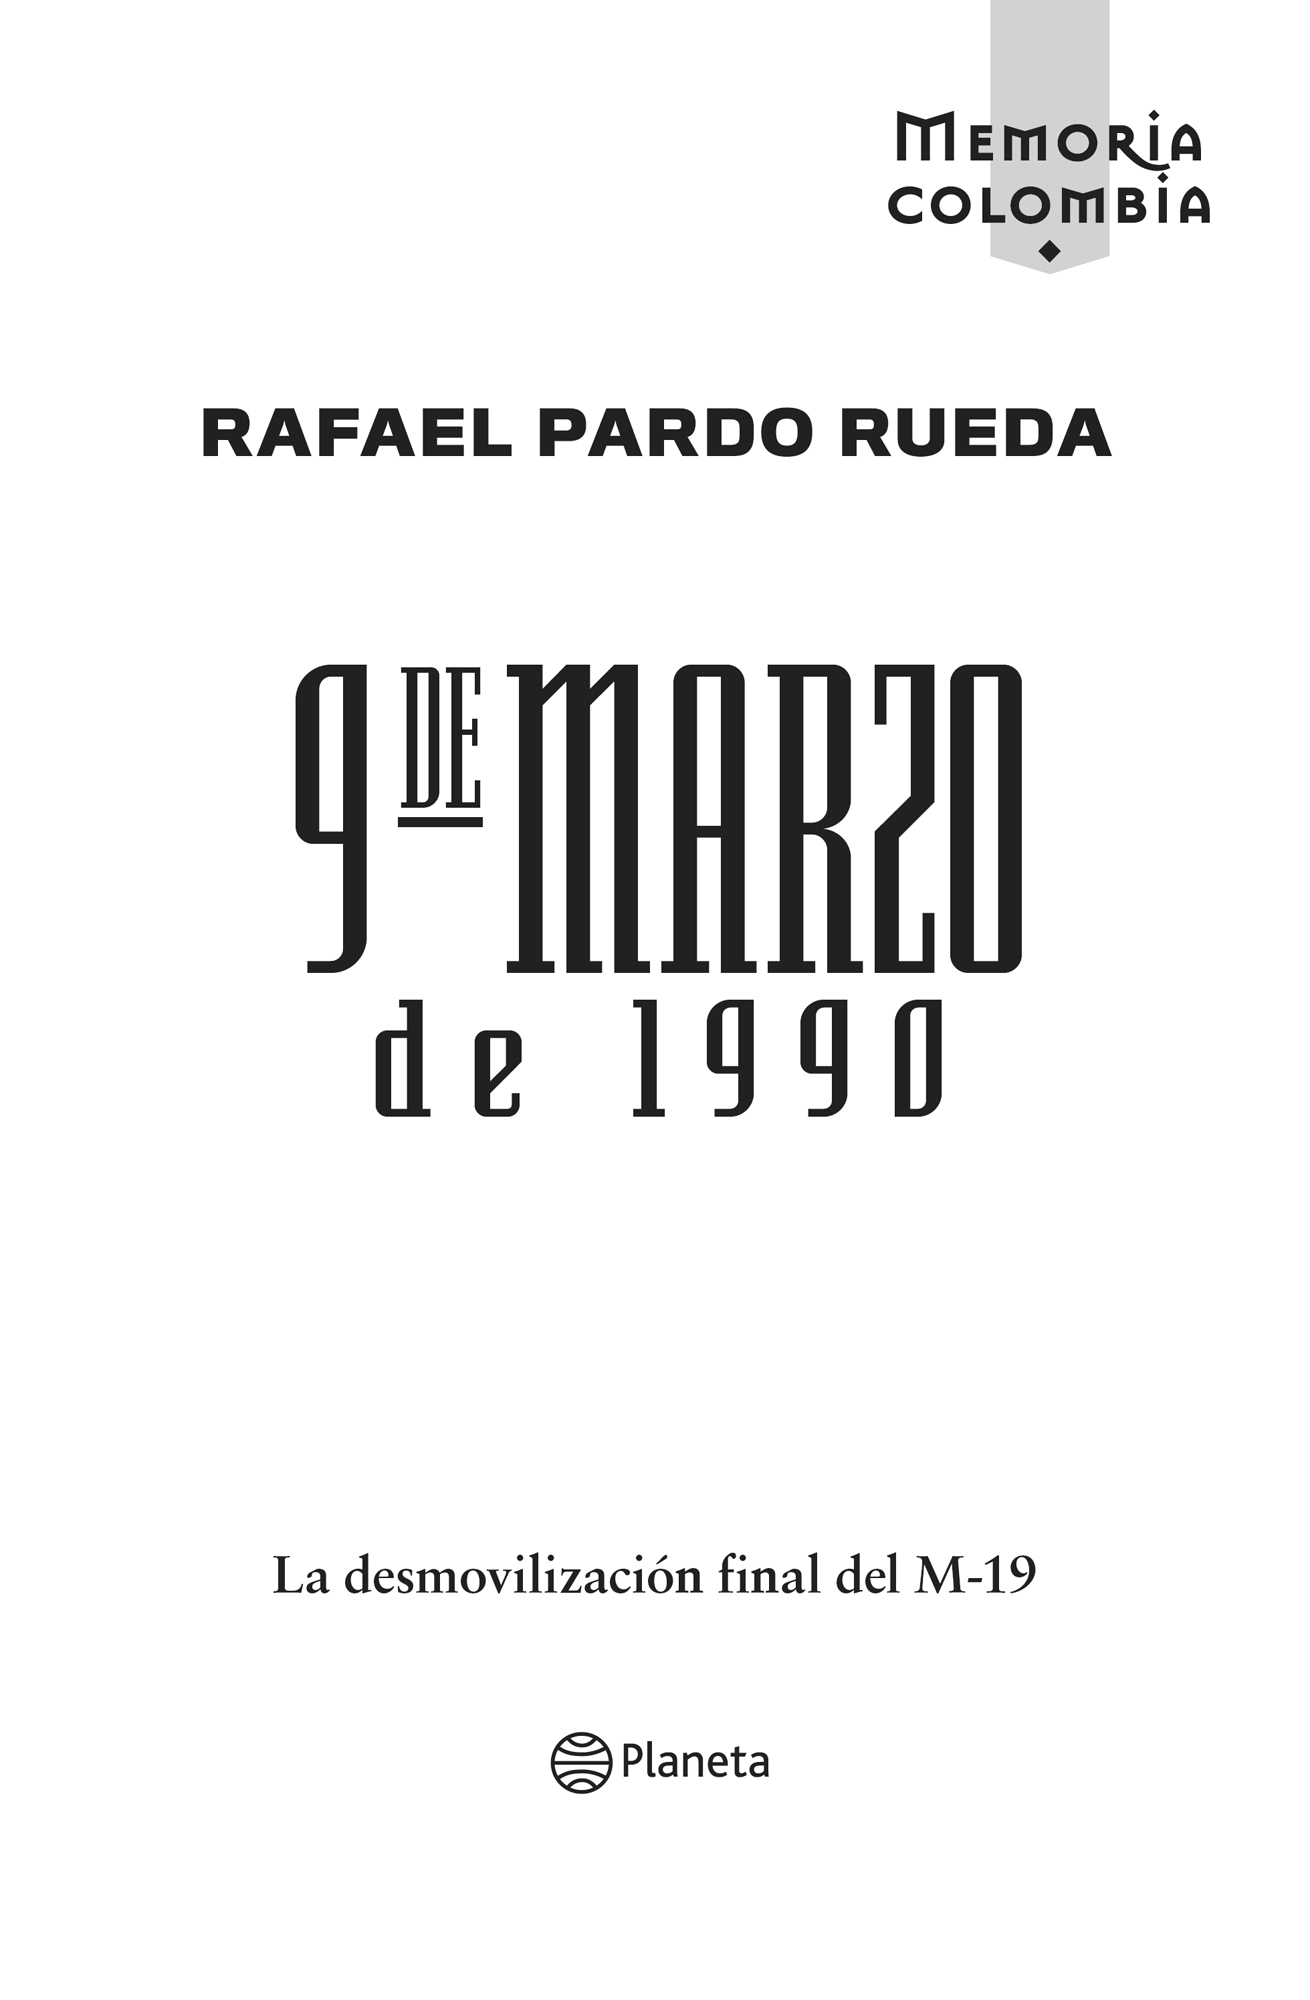 Rafael Pardo 2020 Fotografías propiedad de Carlos Eduardo Jaramillo - photo 1